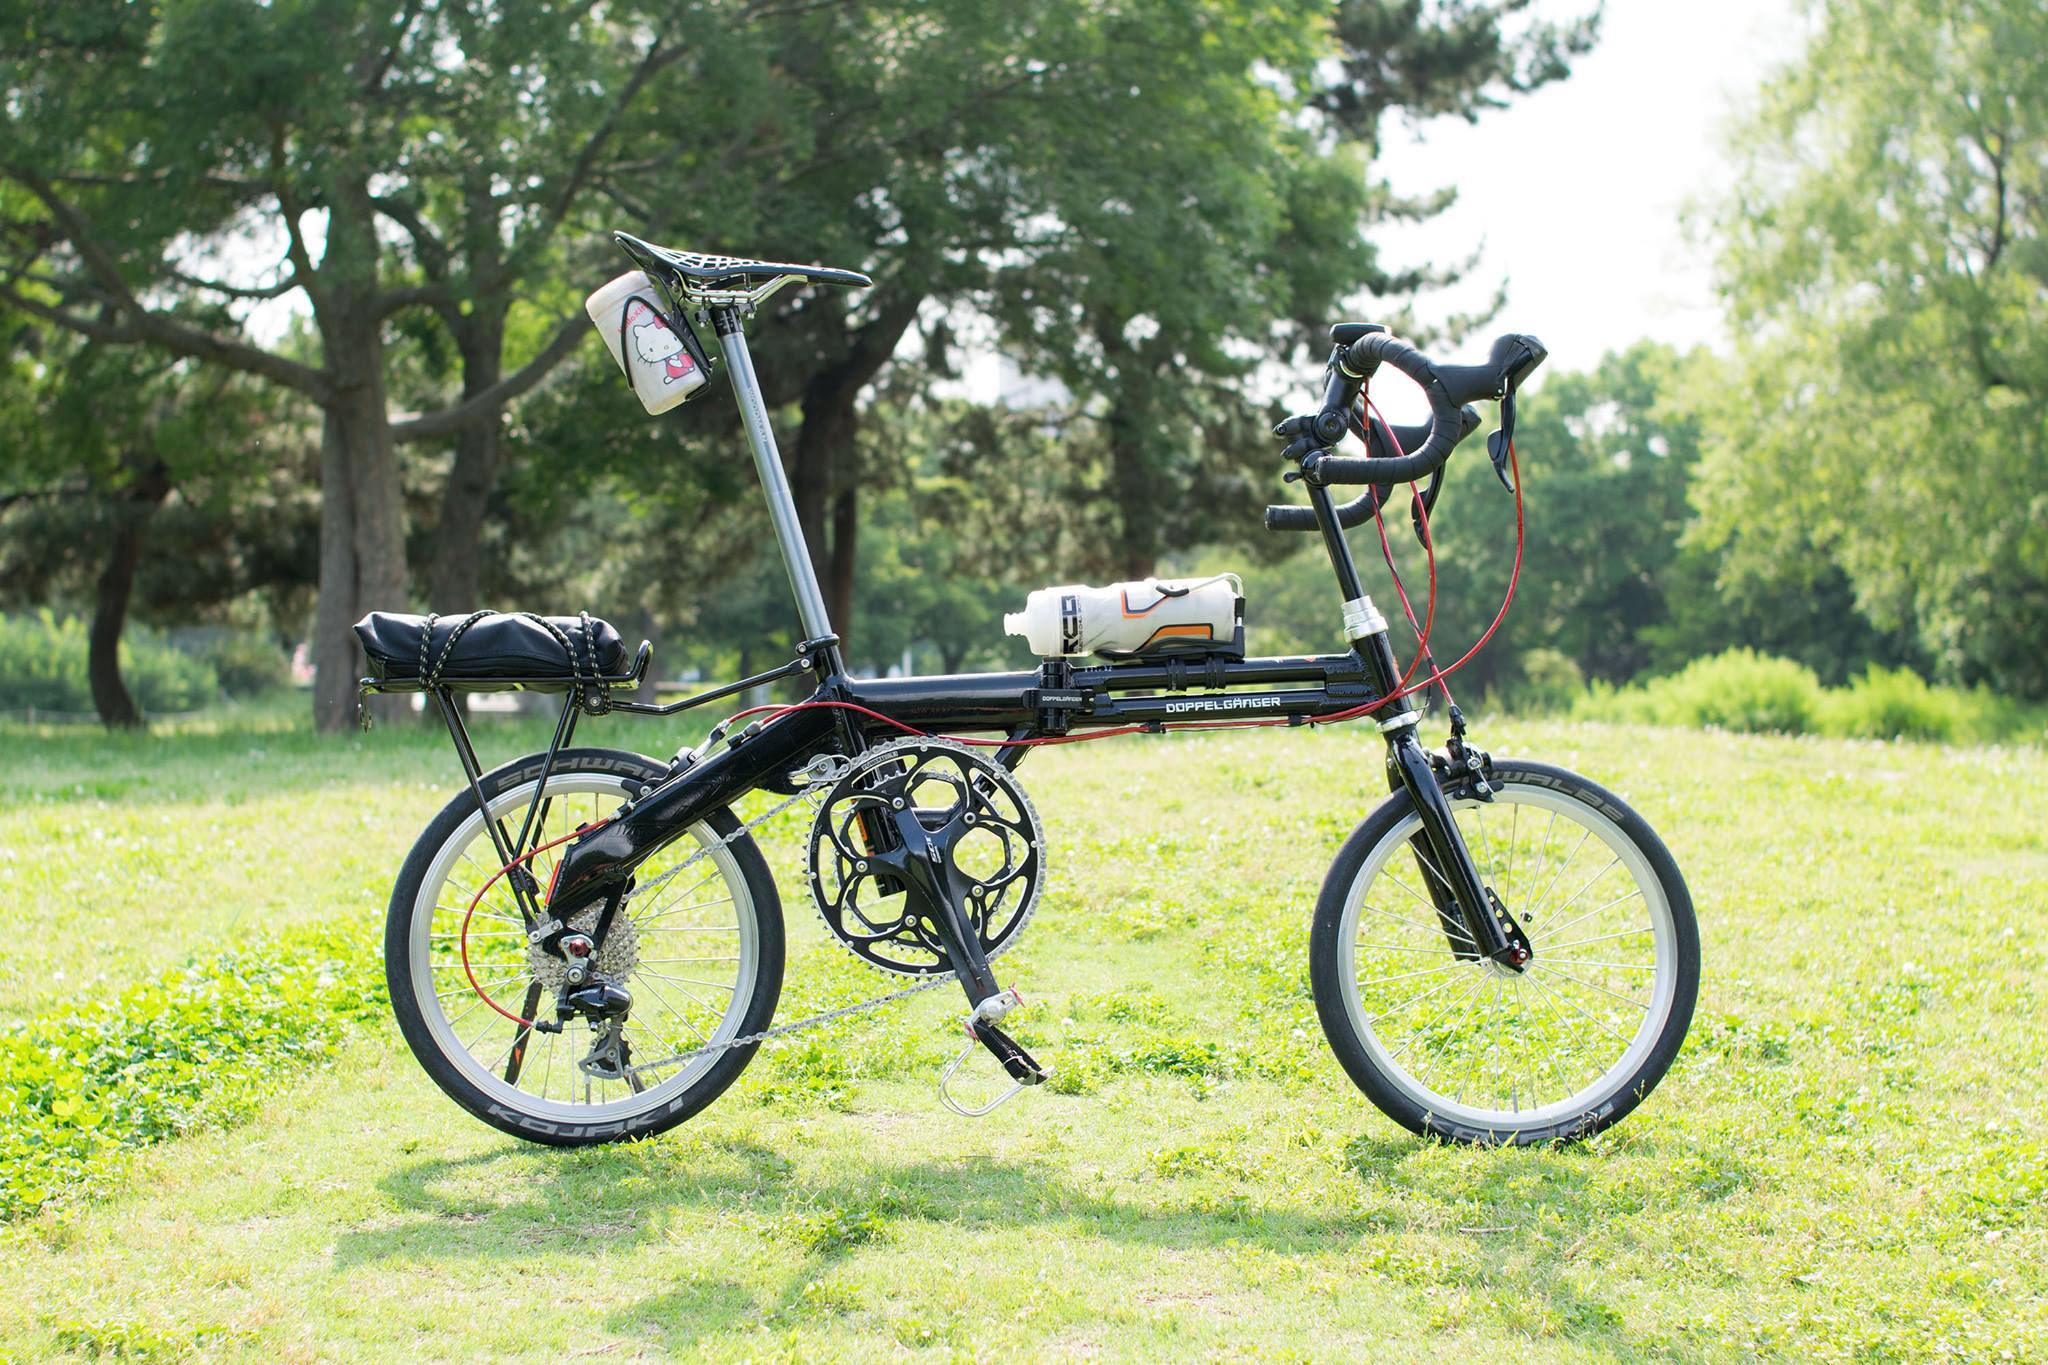 DOPPELGANGER 111 ROADFLYという自転車 | AKAHARAPHOTO DIARY